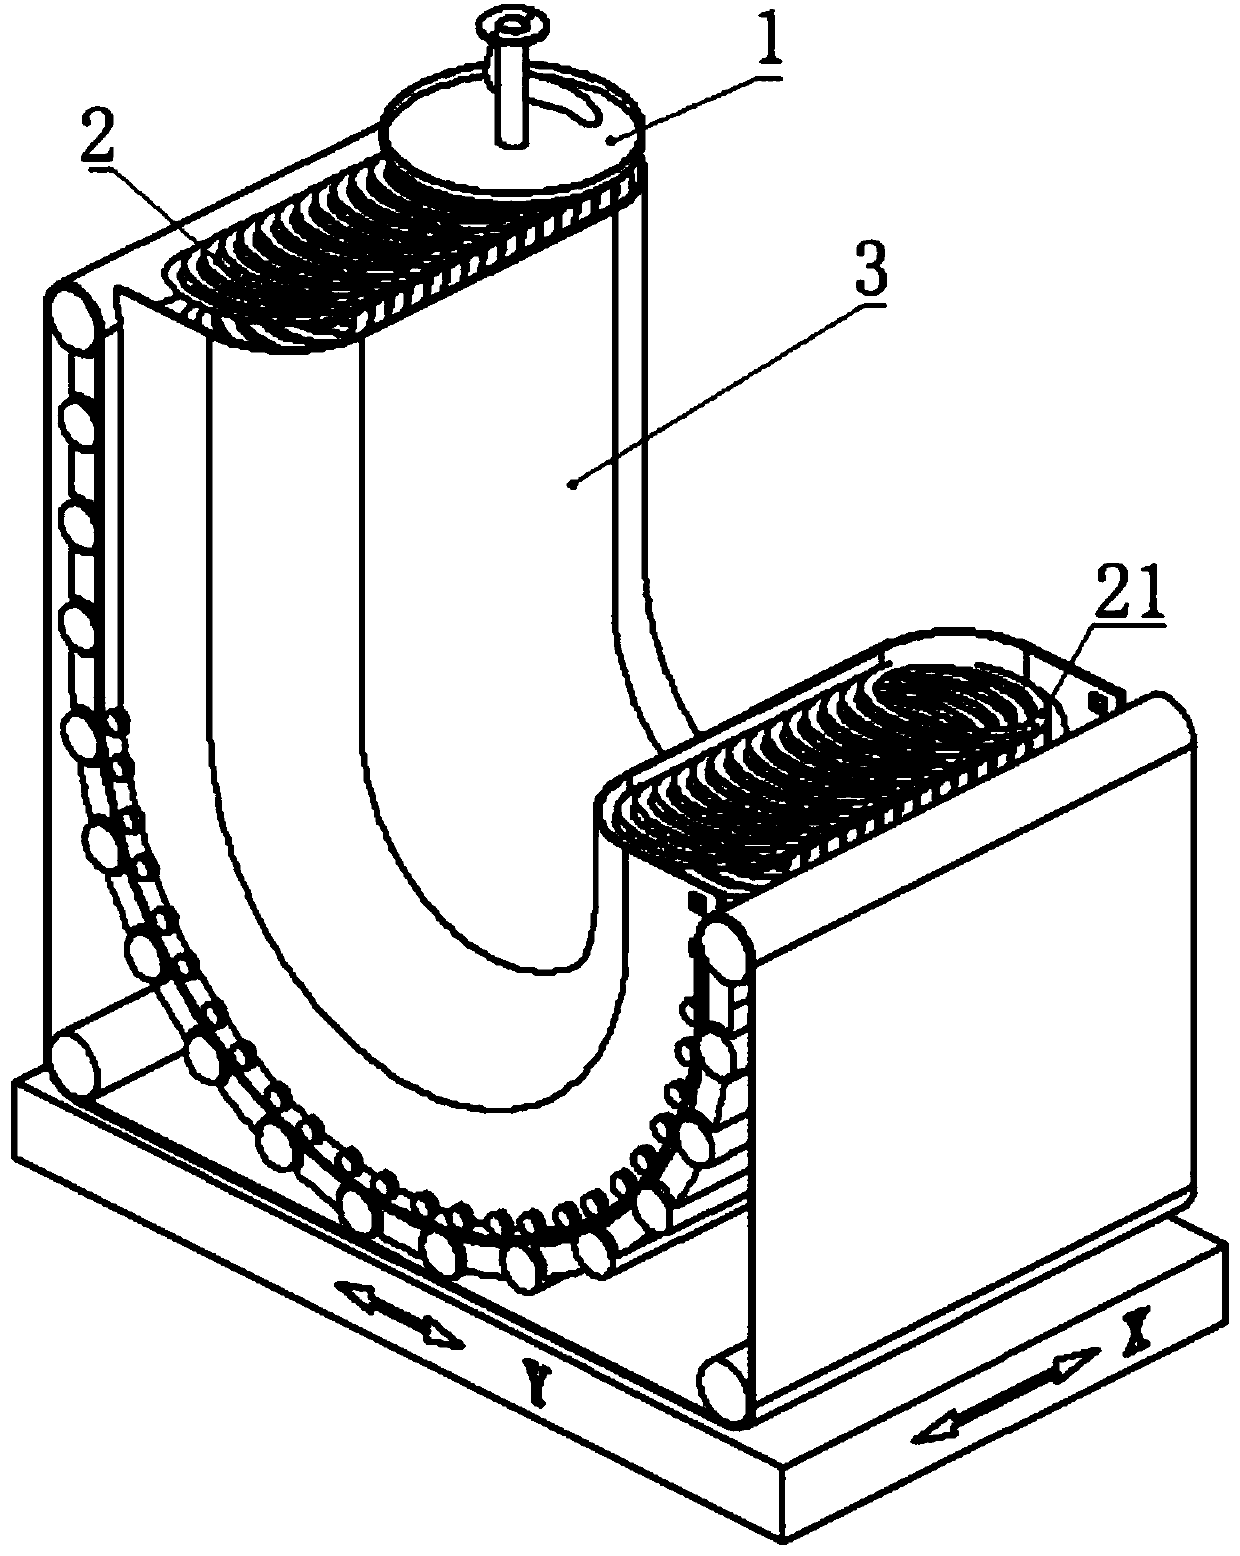 Non-slide fiber strip storage device with U-shaped bottom part